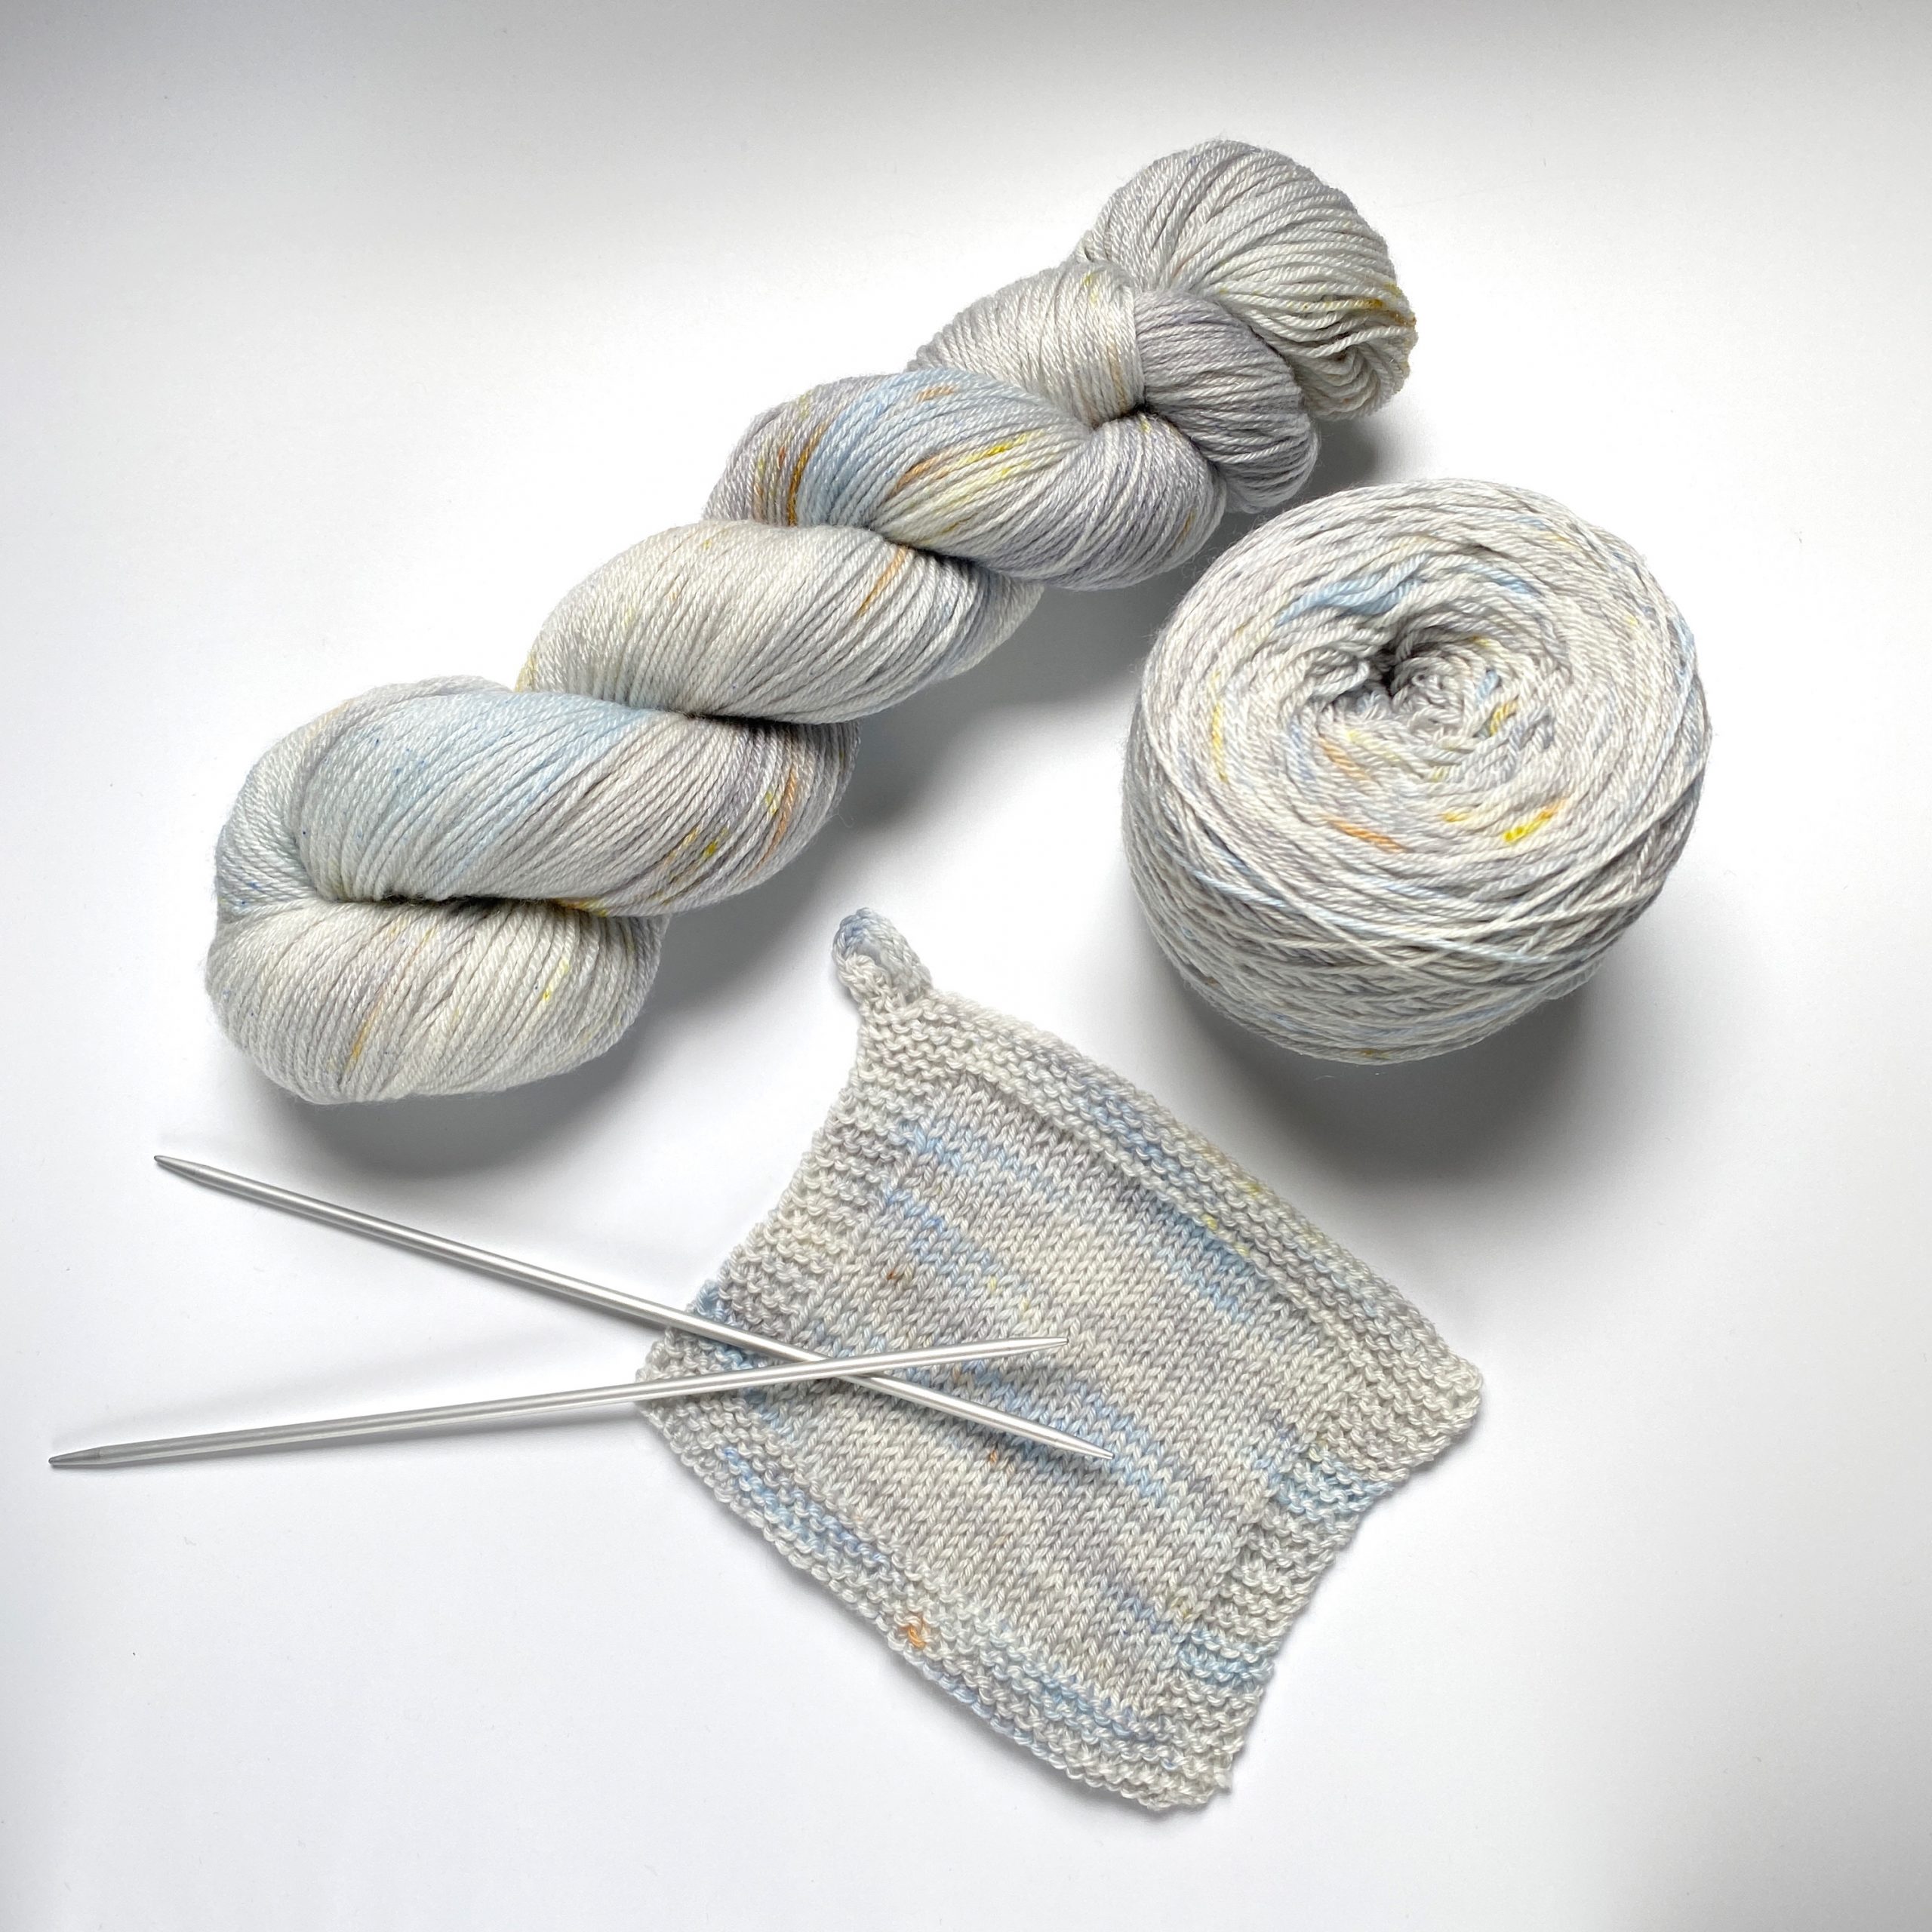 Cirkus Mange Prædike Hand-dyed yarn: Stripes and Pooling – Heathland Knits